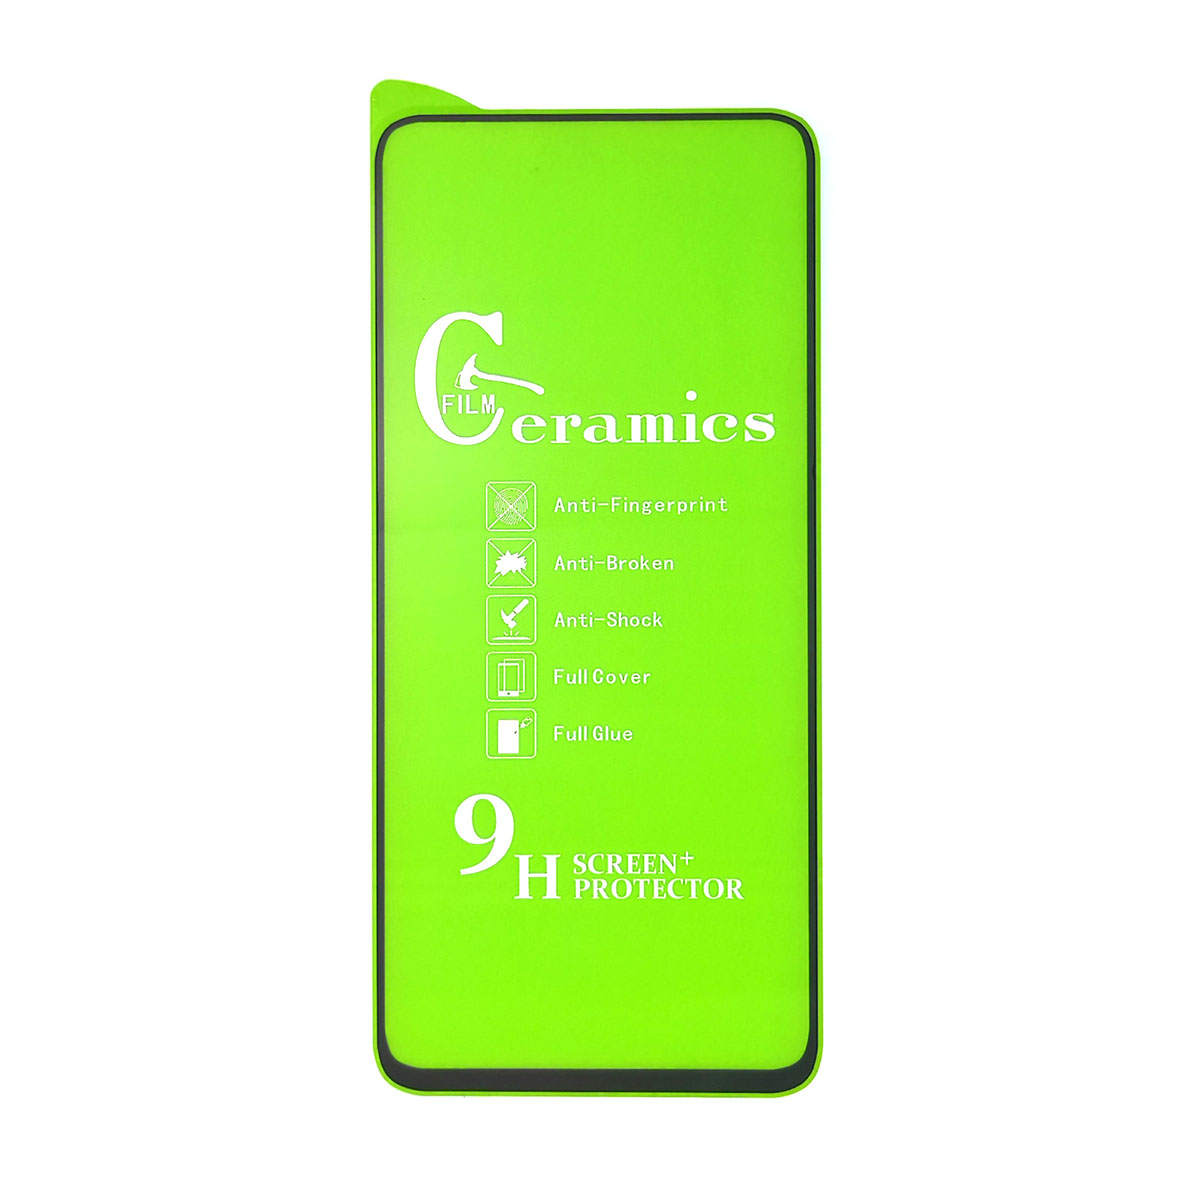 Защитное стекло 9H Ceramics для XIAOMI Redmi Note 9 Pro, Note 9S, SAMSUNG Galaxy A71, A81, A91, Note 10 lite, цвет черный